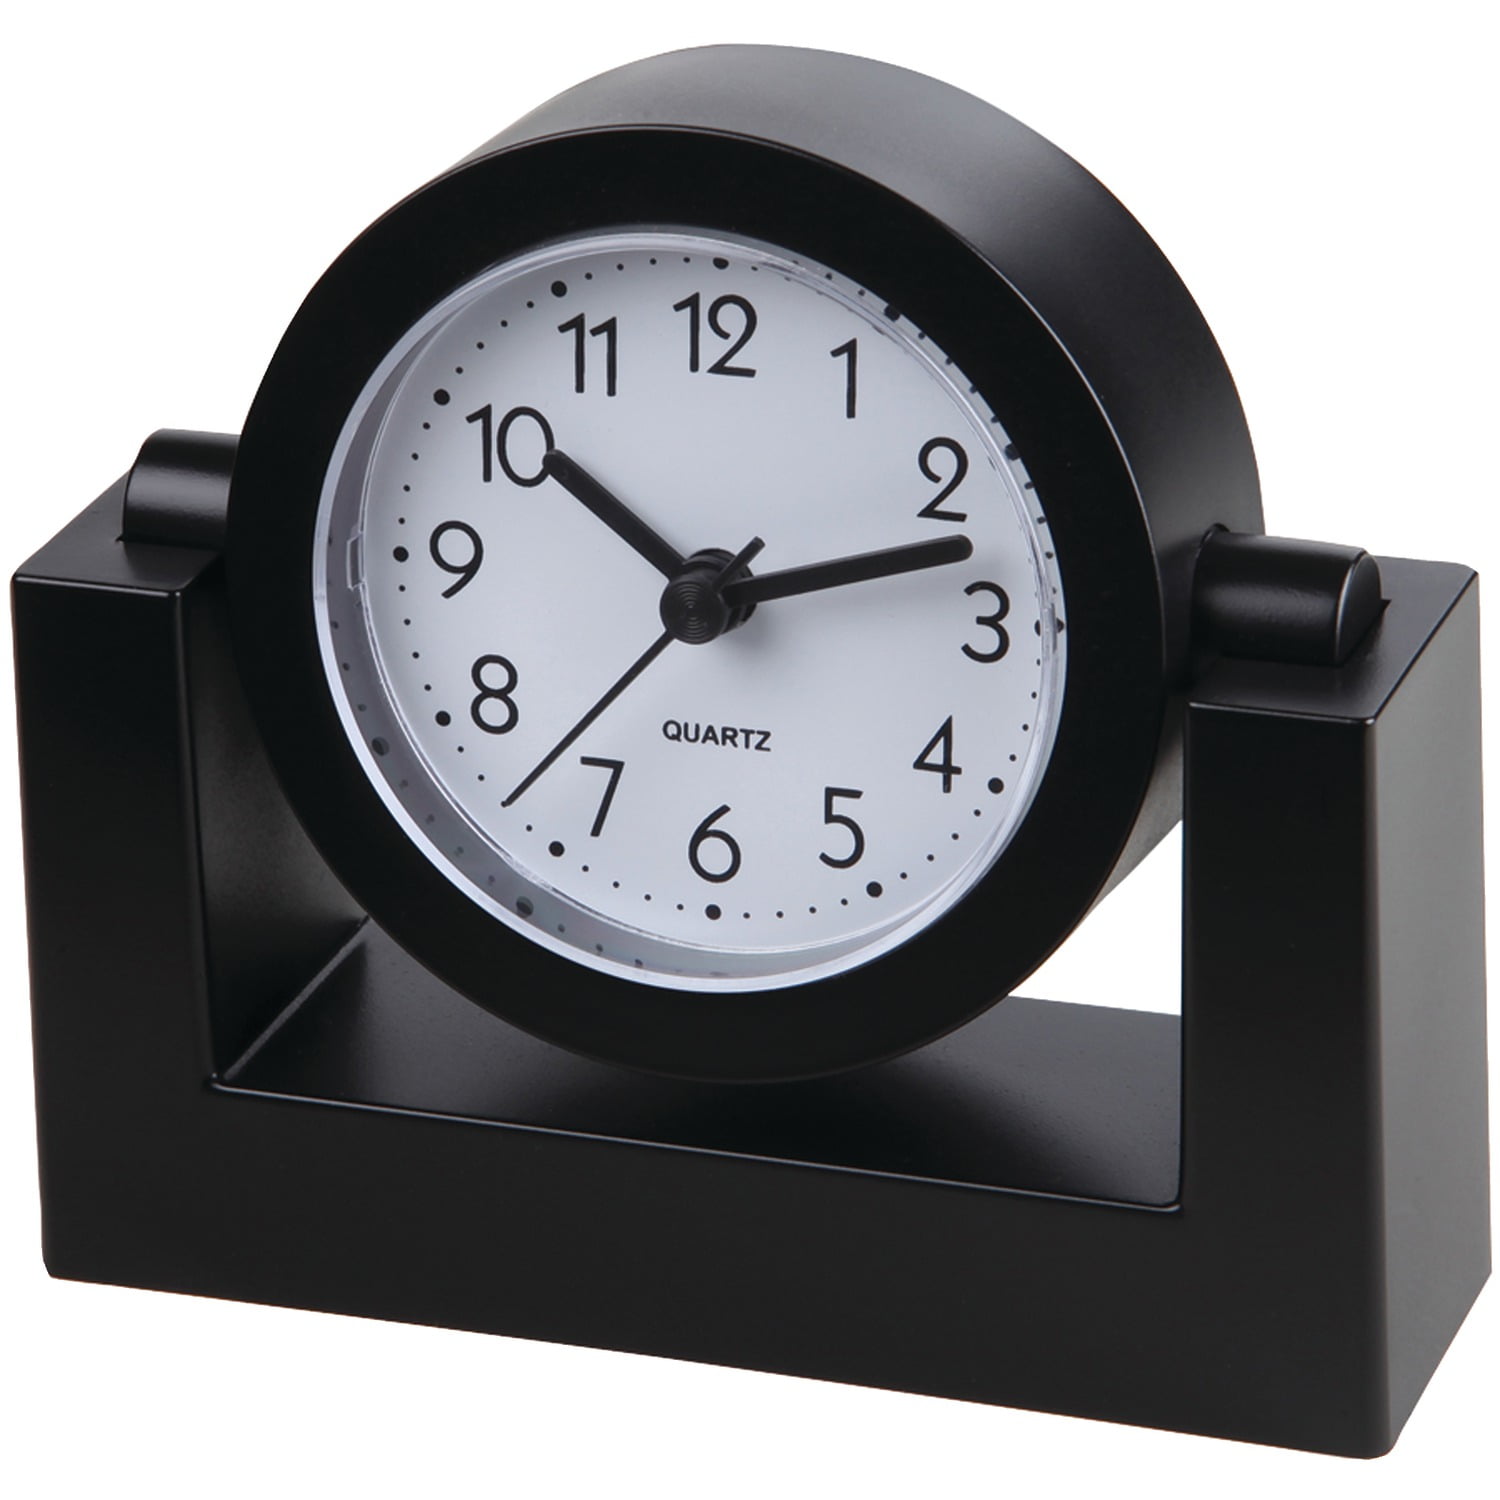 Timekeeper 2.0 Desk Clock